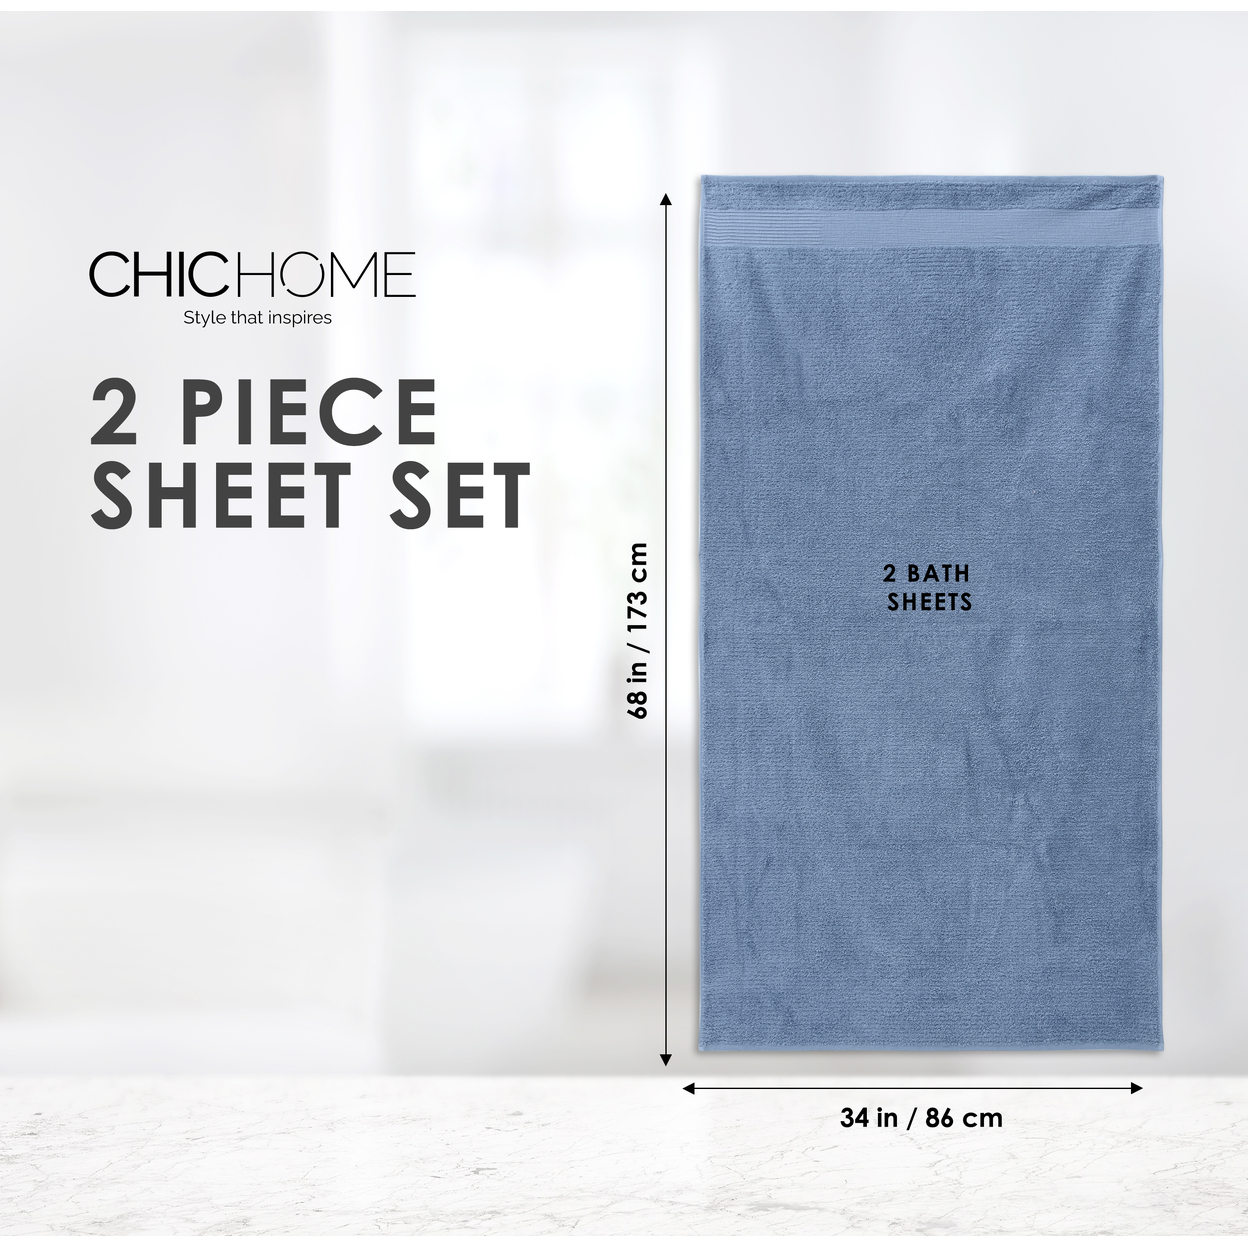 Chic Home Luxurious 2-Piece 100% Pure Turkish Cotton Bath Sheet Towels, 34x68, Jacquard Weave Design, OEKO-TEX Certified Set - Grey